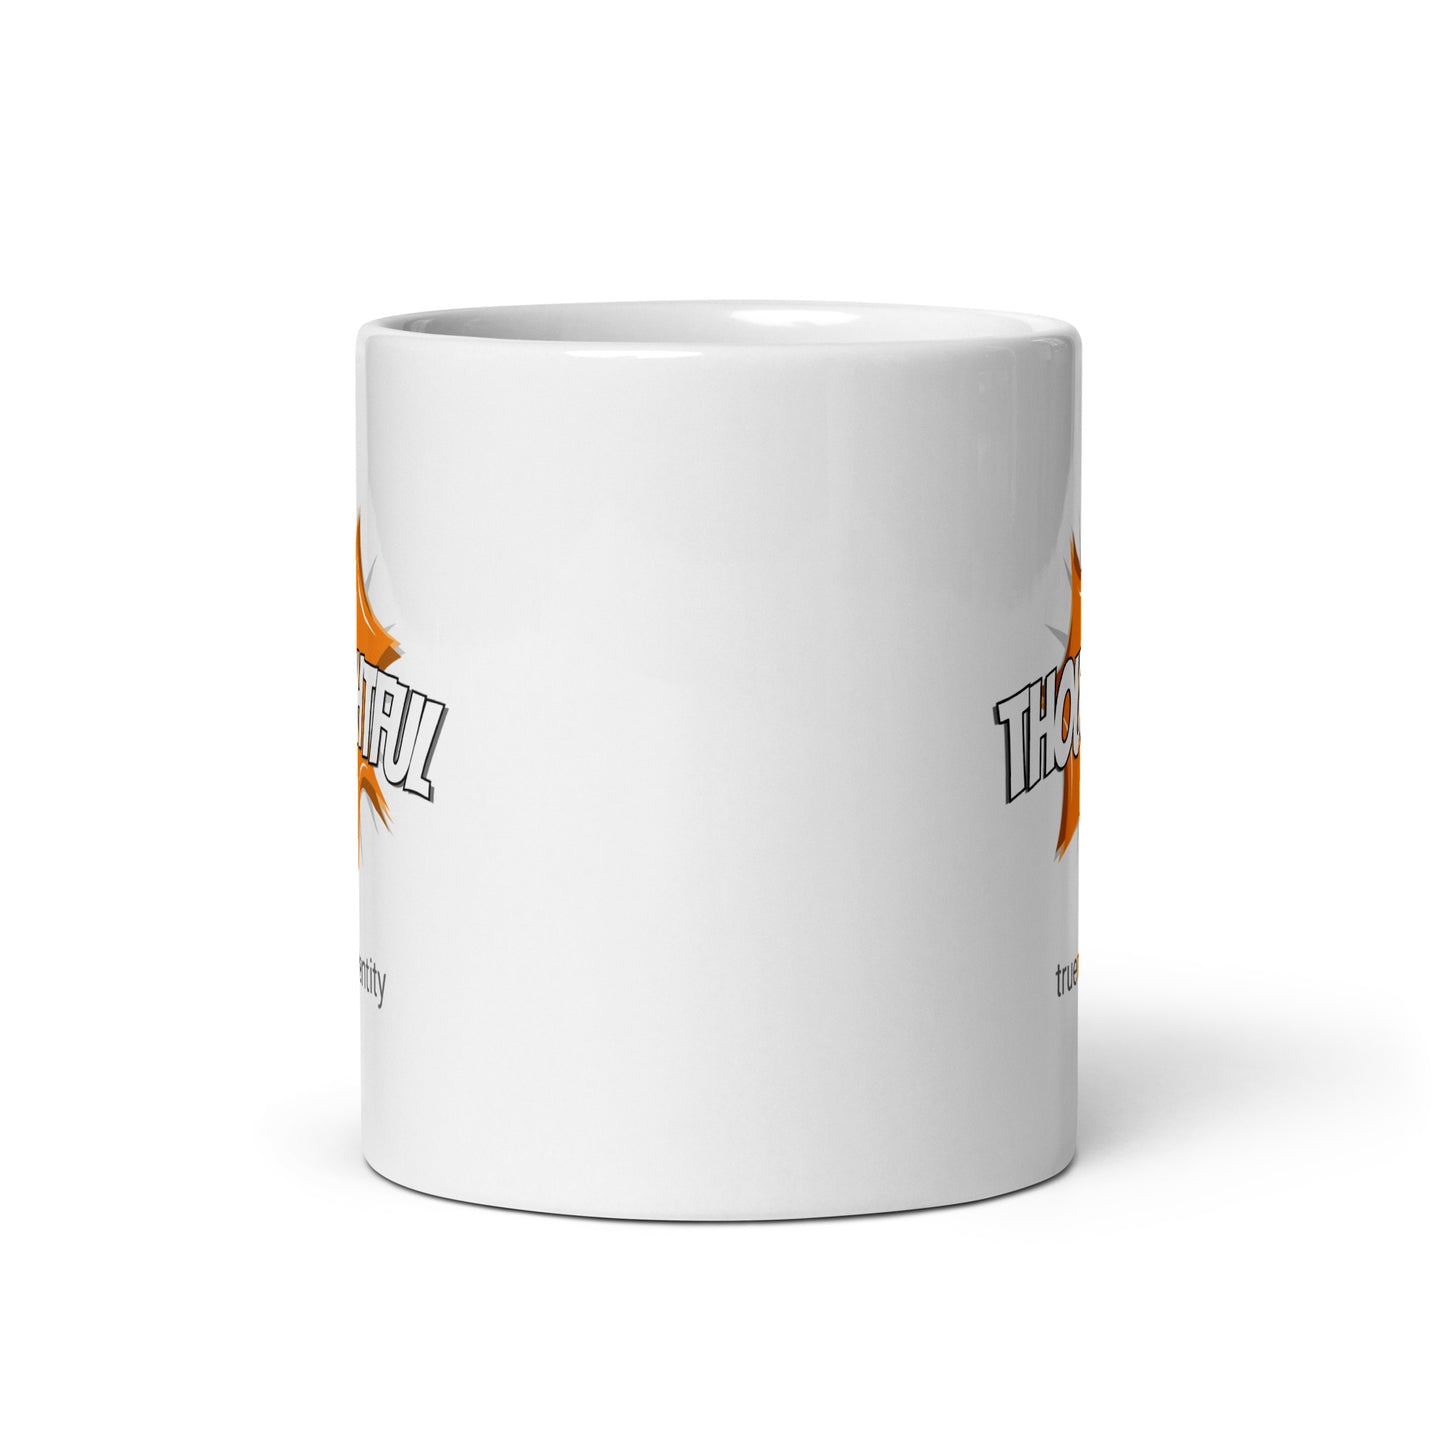 THOUGHTFUL White Coffee Mug Action 11 oz or 15 oz